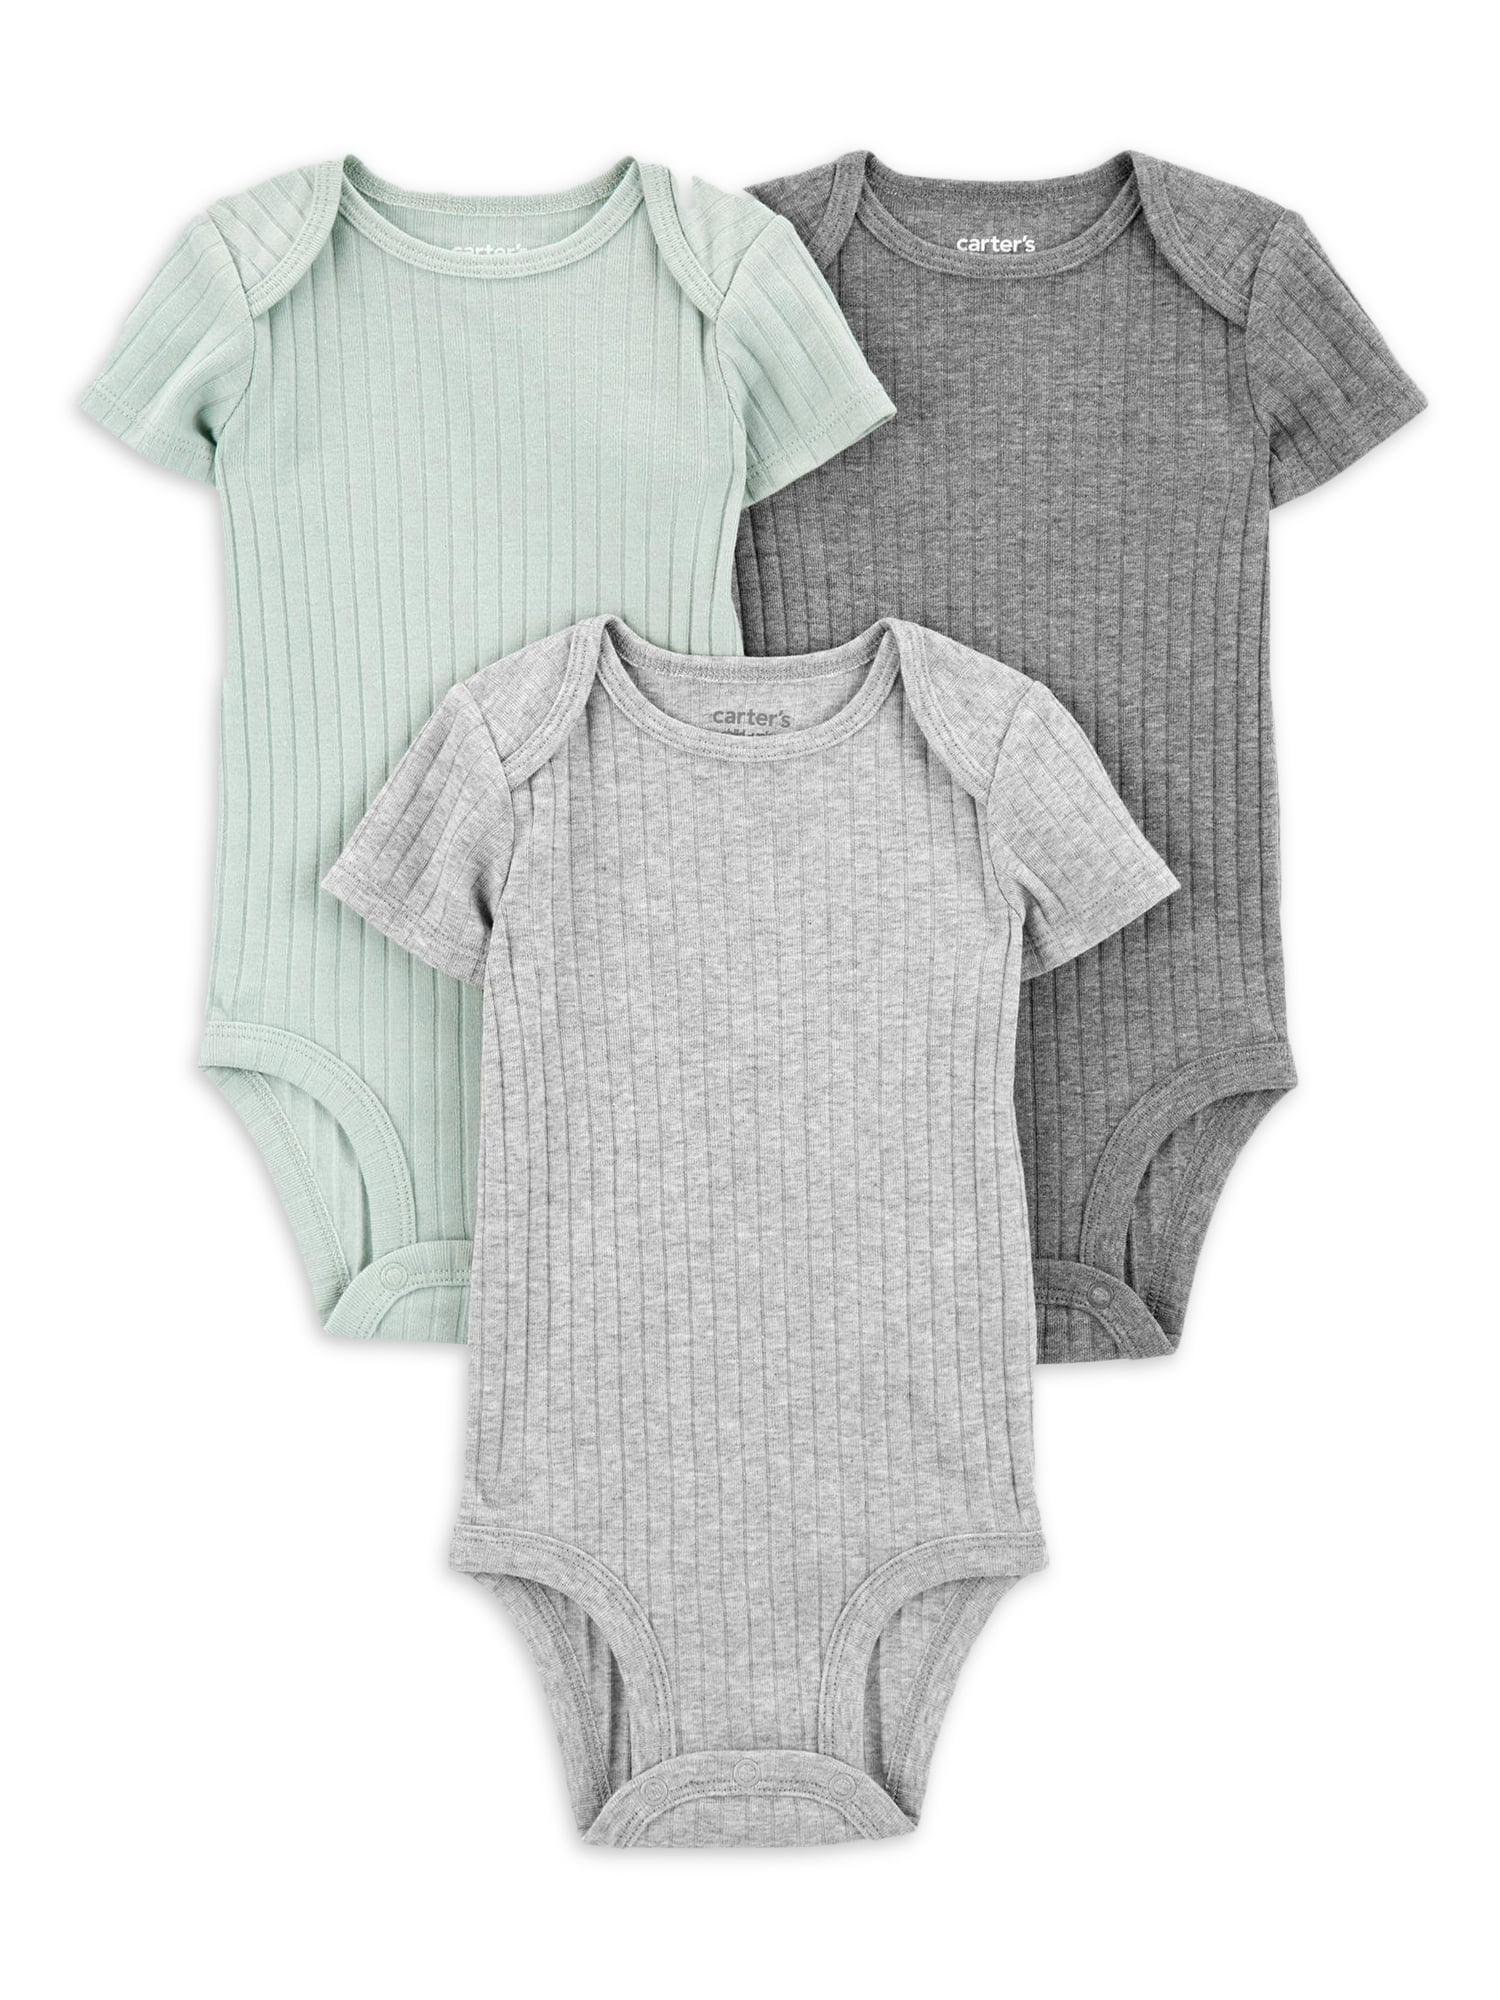 Carter's Child of Mine Short Sleeve Bodysuits, 3-pack (Baby Boys